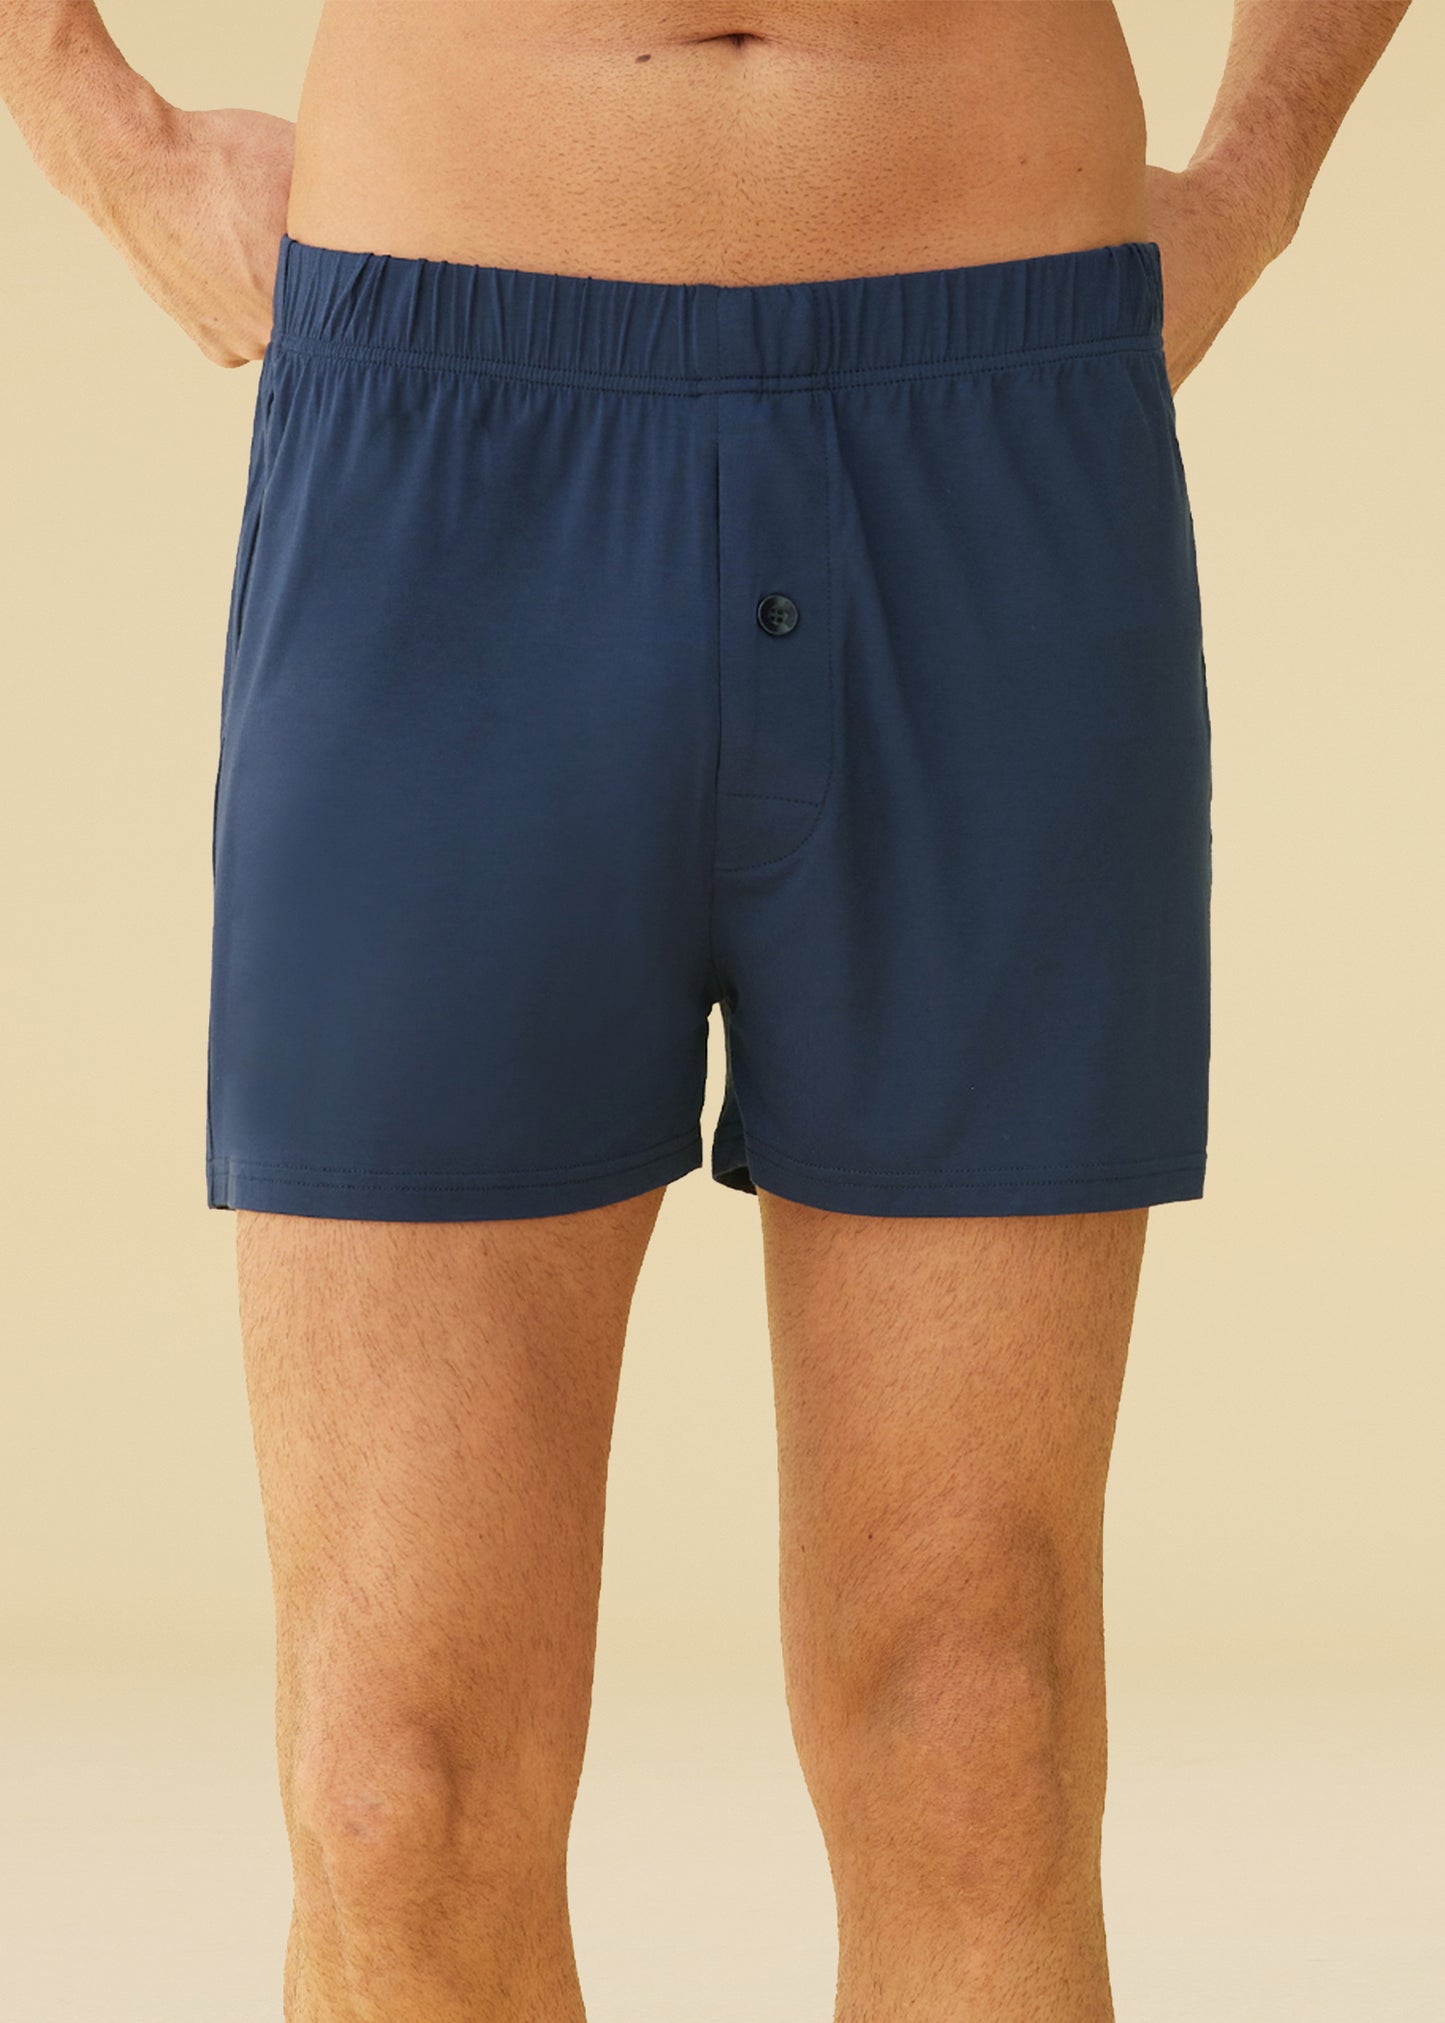 Men's Bamboo Viscose Underwear Boxer Shorts Trunk Briefs 3 Pack